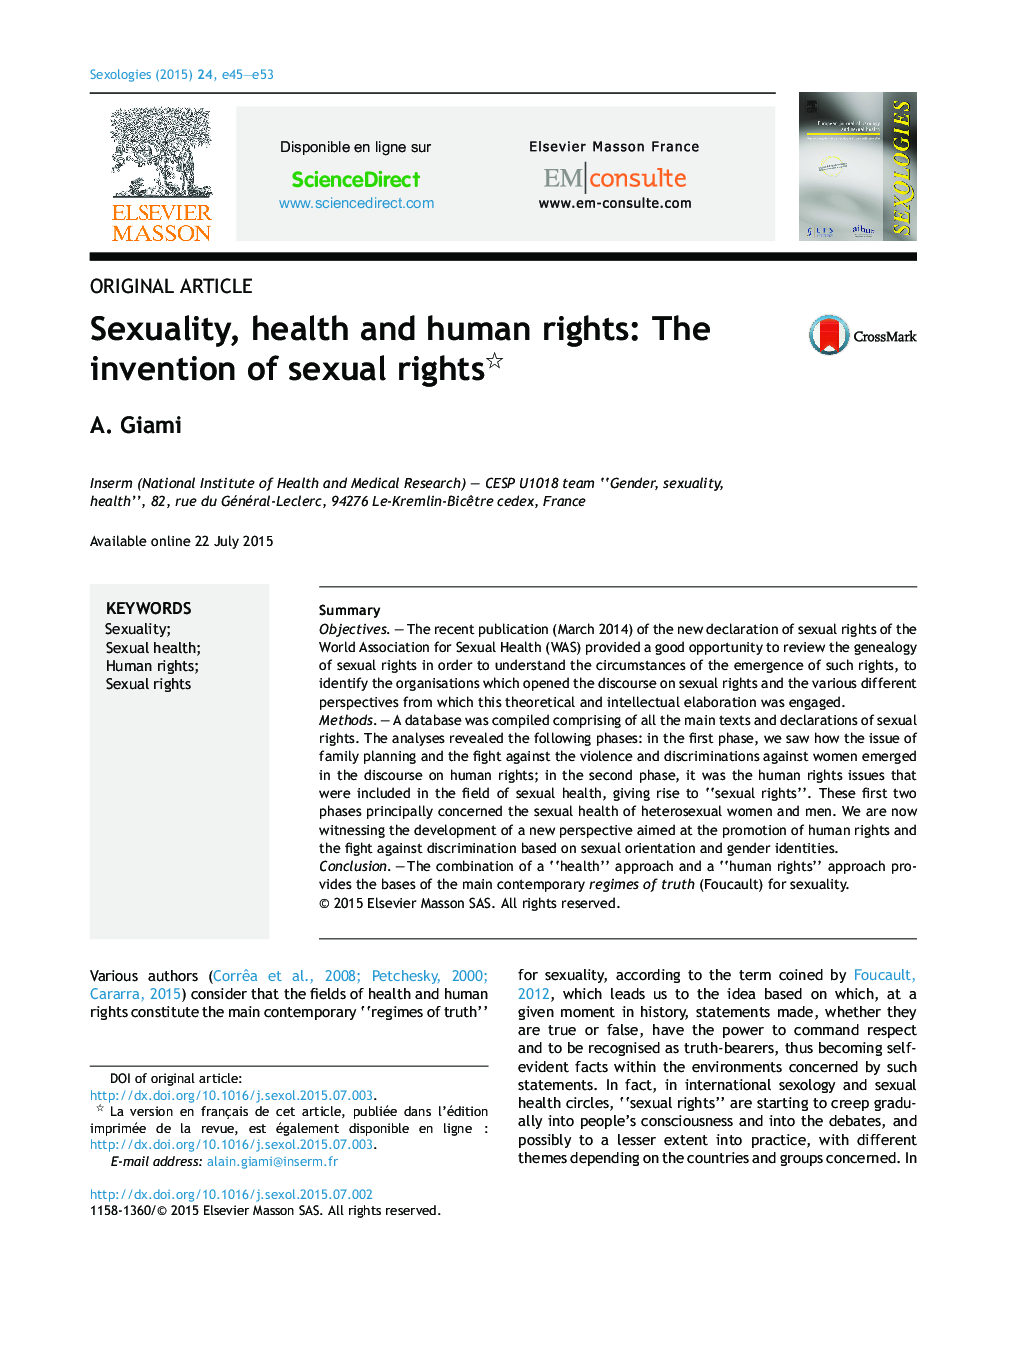 تمایلات جنسی، سلامتی و حقوق بشر: ابداع حقوق بشر